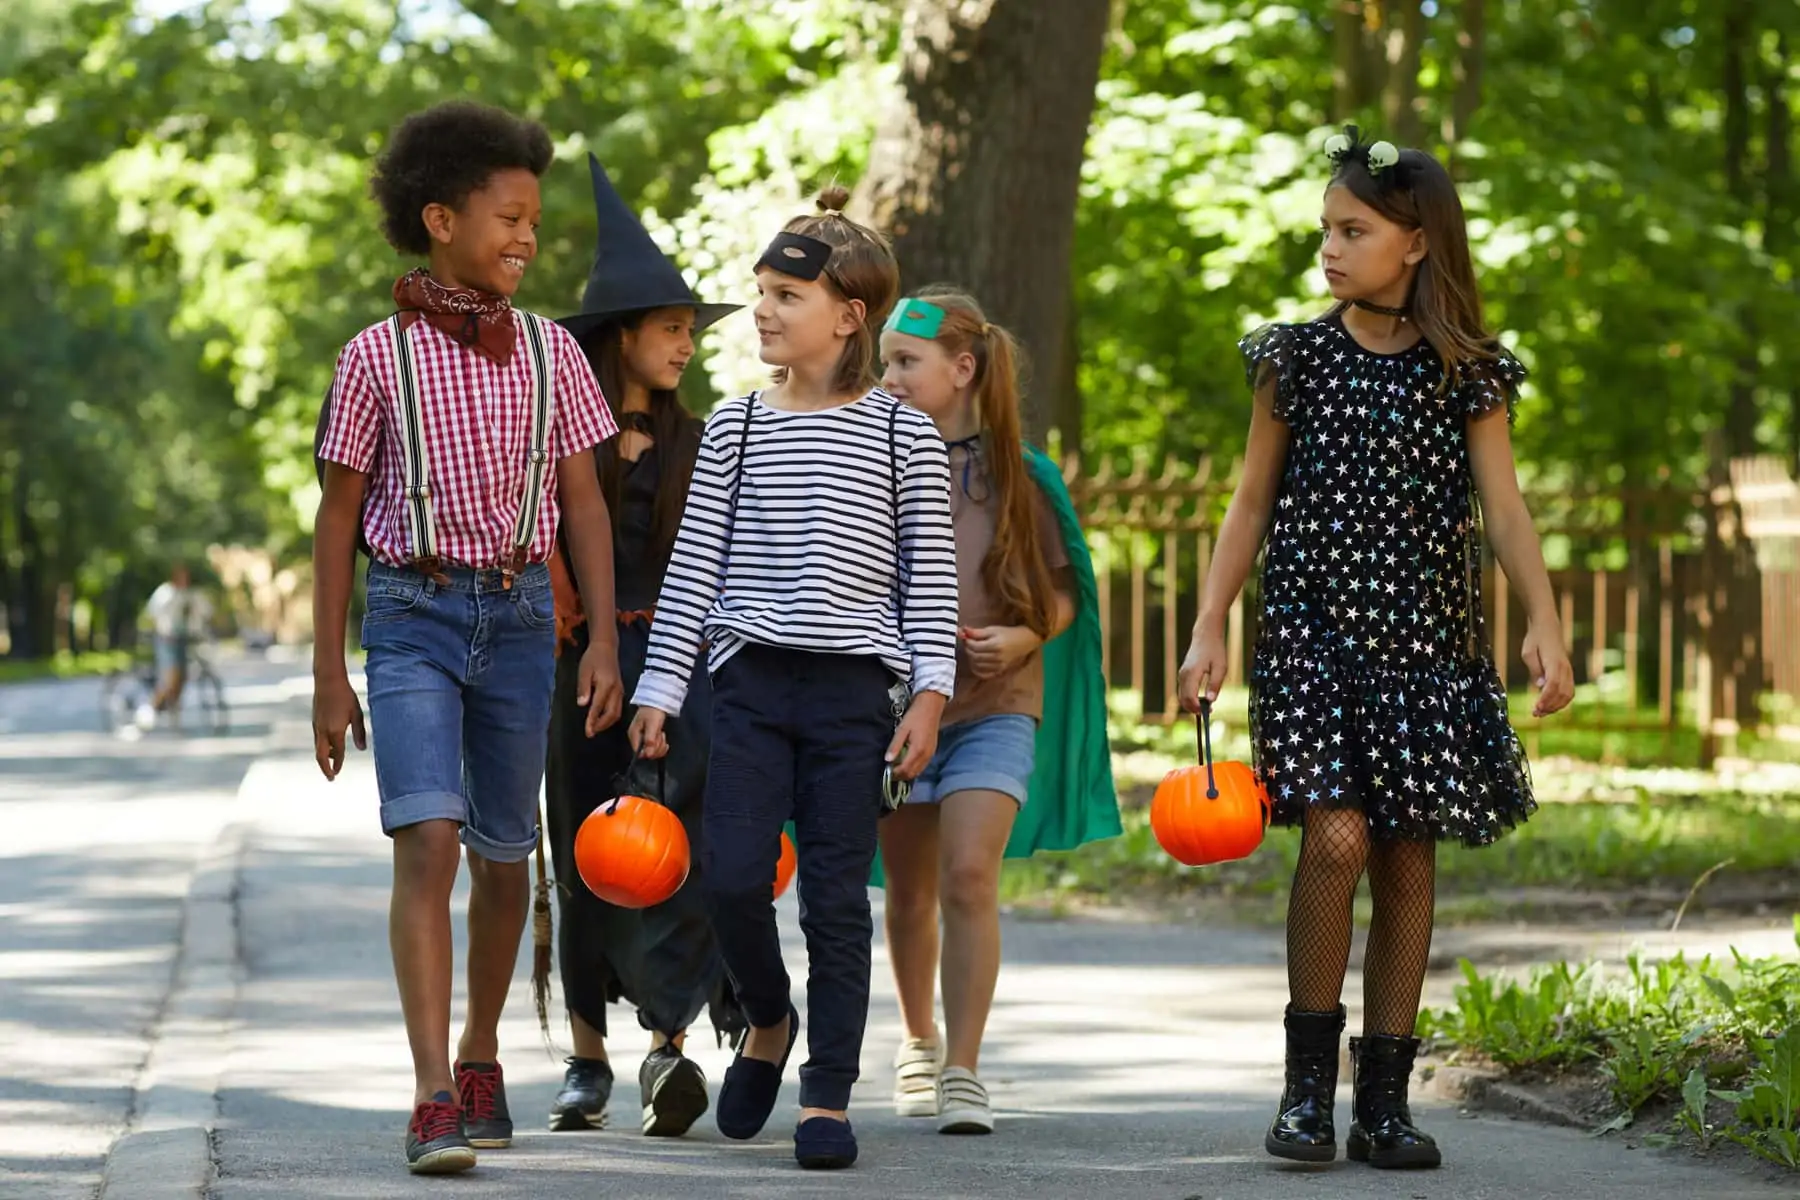 group-children-costumes-with-toy-pumpkins-walking-along-street-celebrate-sensory friendly halloween